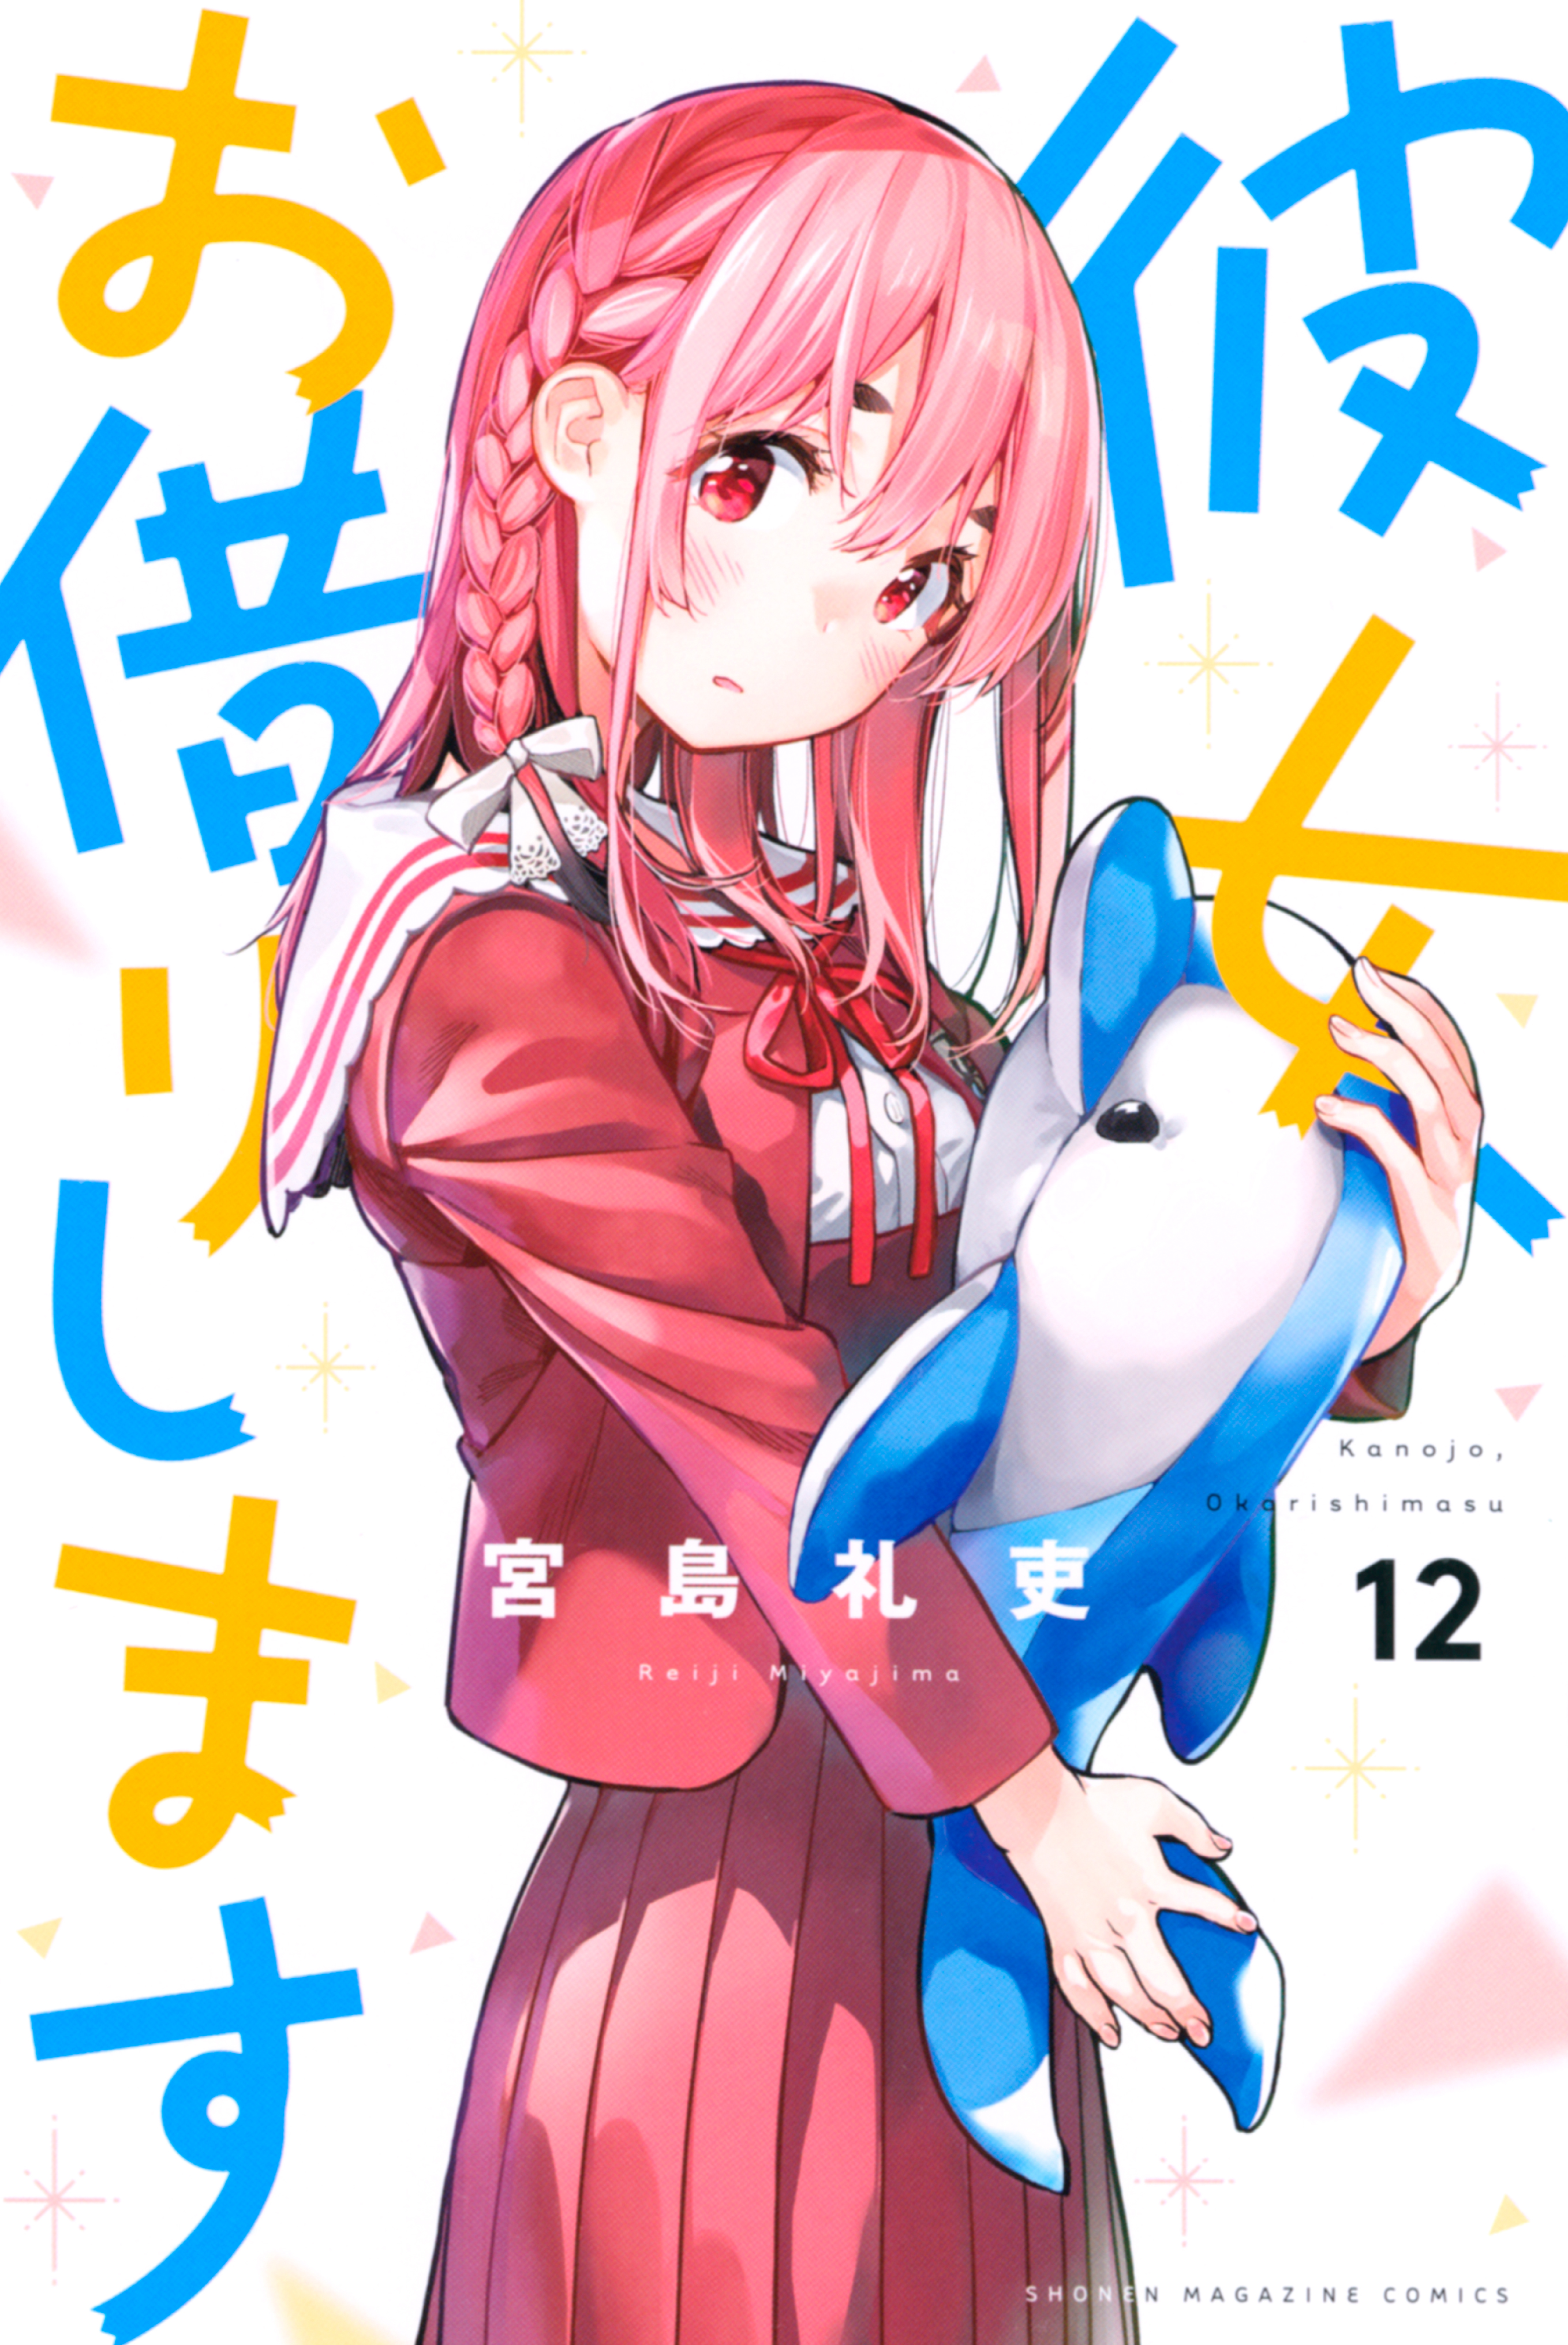 DISC] Rent-A-Girlfriend / Kanojo, Okarishimasu - Ch. 284 - The Girlfriend  And Recreation - MangaDex : r/manga